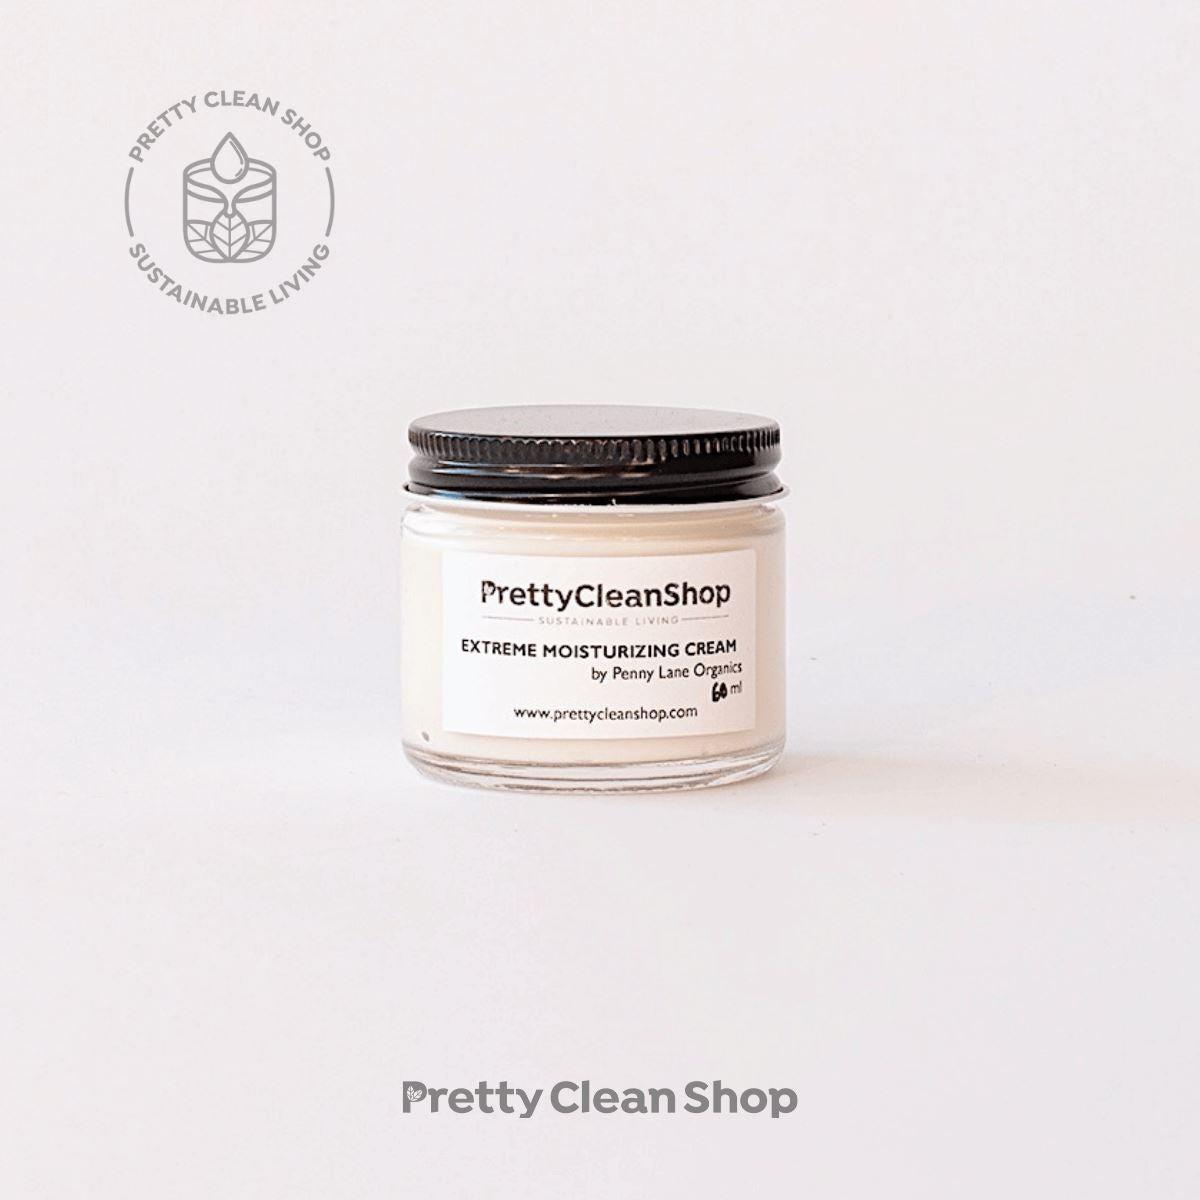 Extreme Moisturizing Cream Skincare Penny Lane Organics 60ml in refillable glass jar (includes $1.25 deposit) Prettycleanshop